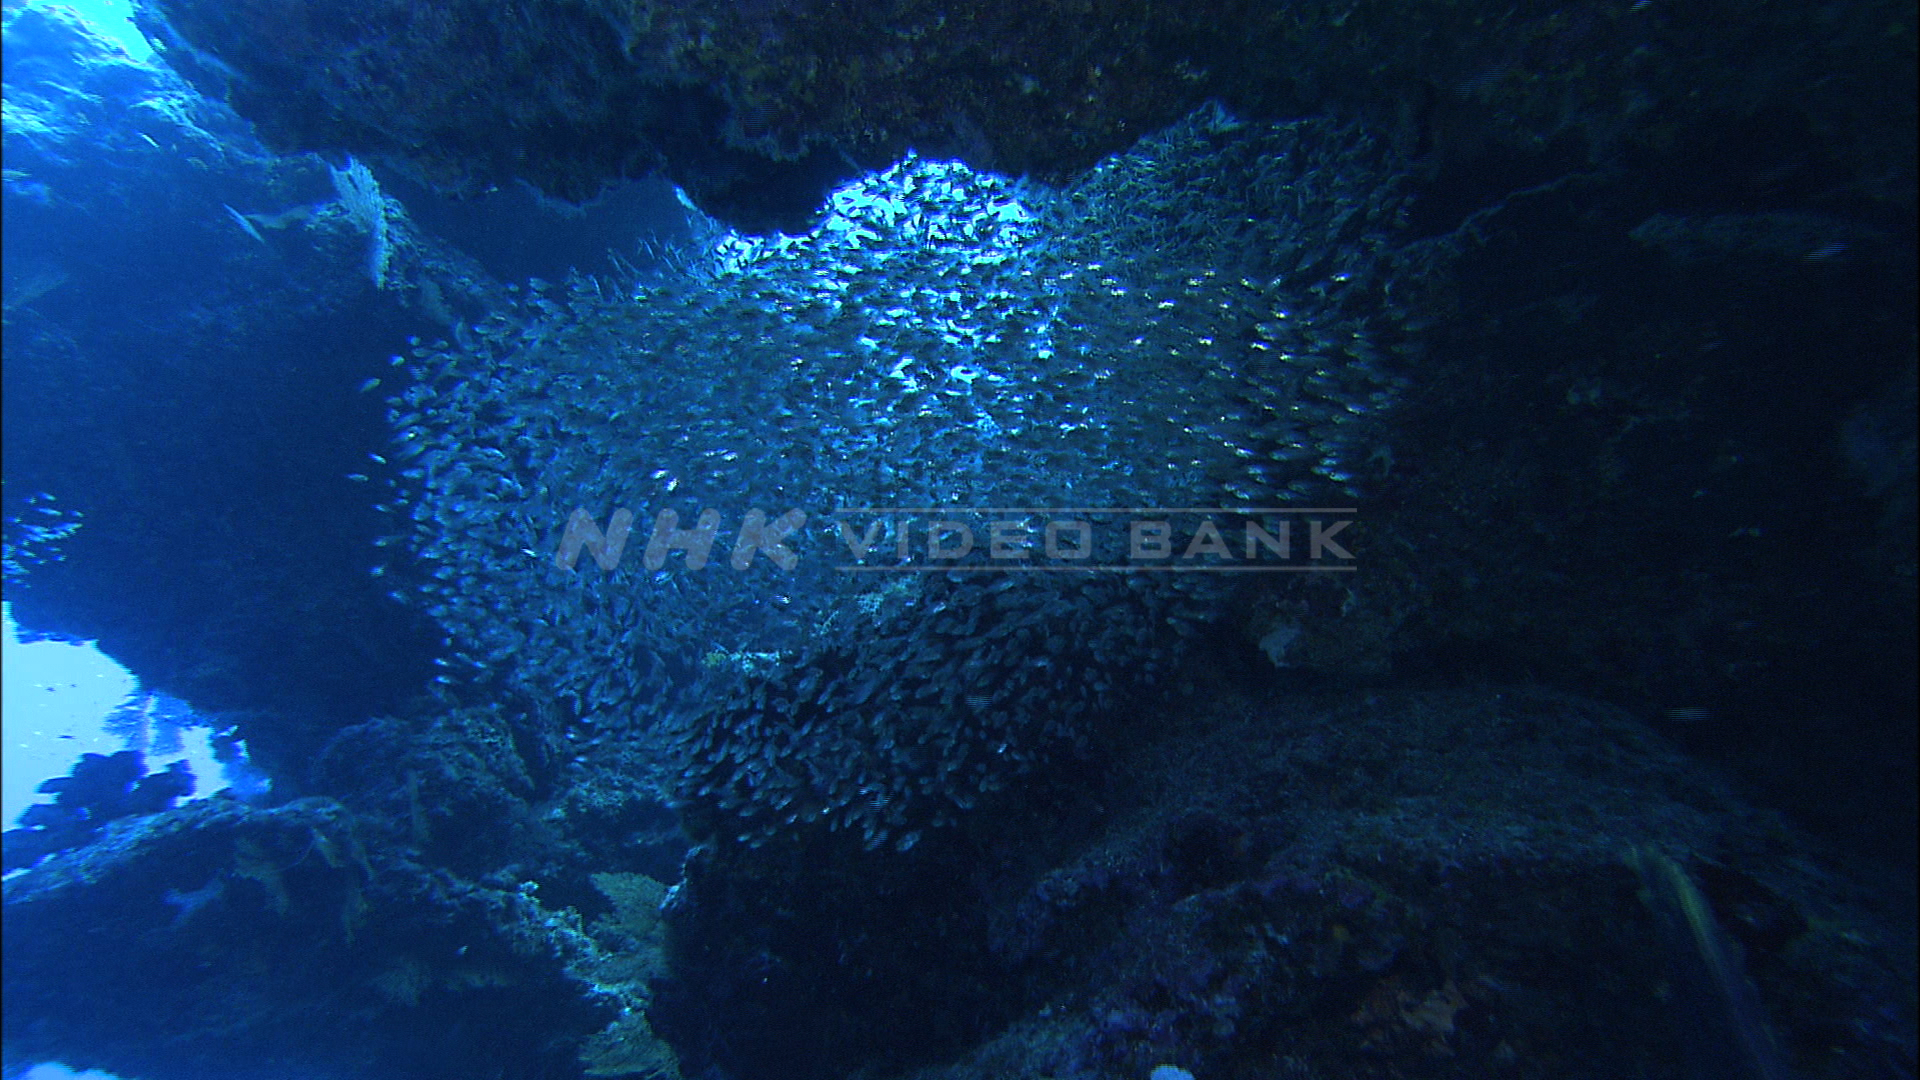 Underwater: the beautiful sea off Kikai Island, southern Japan